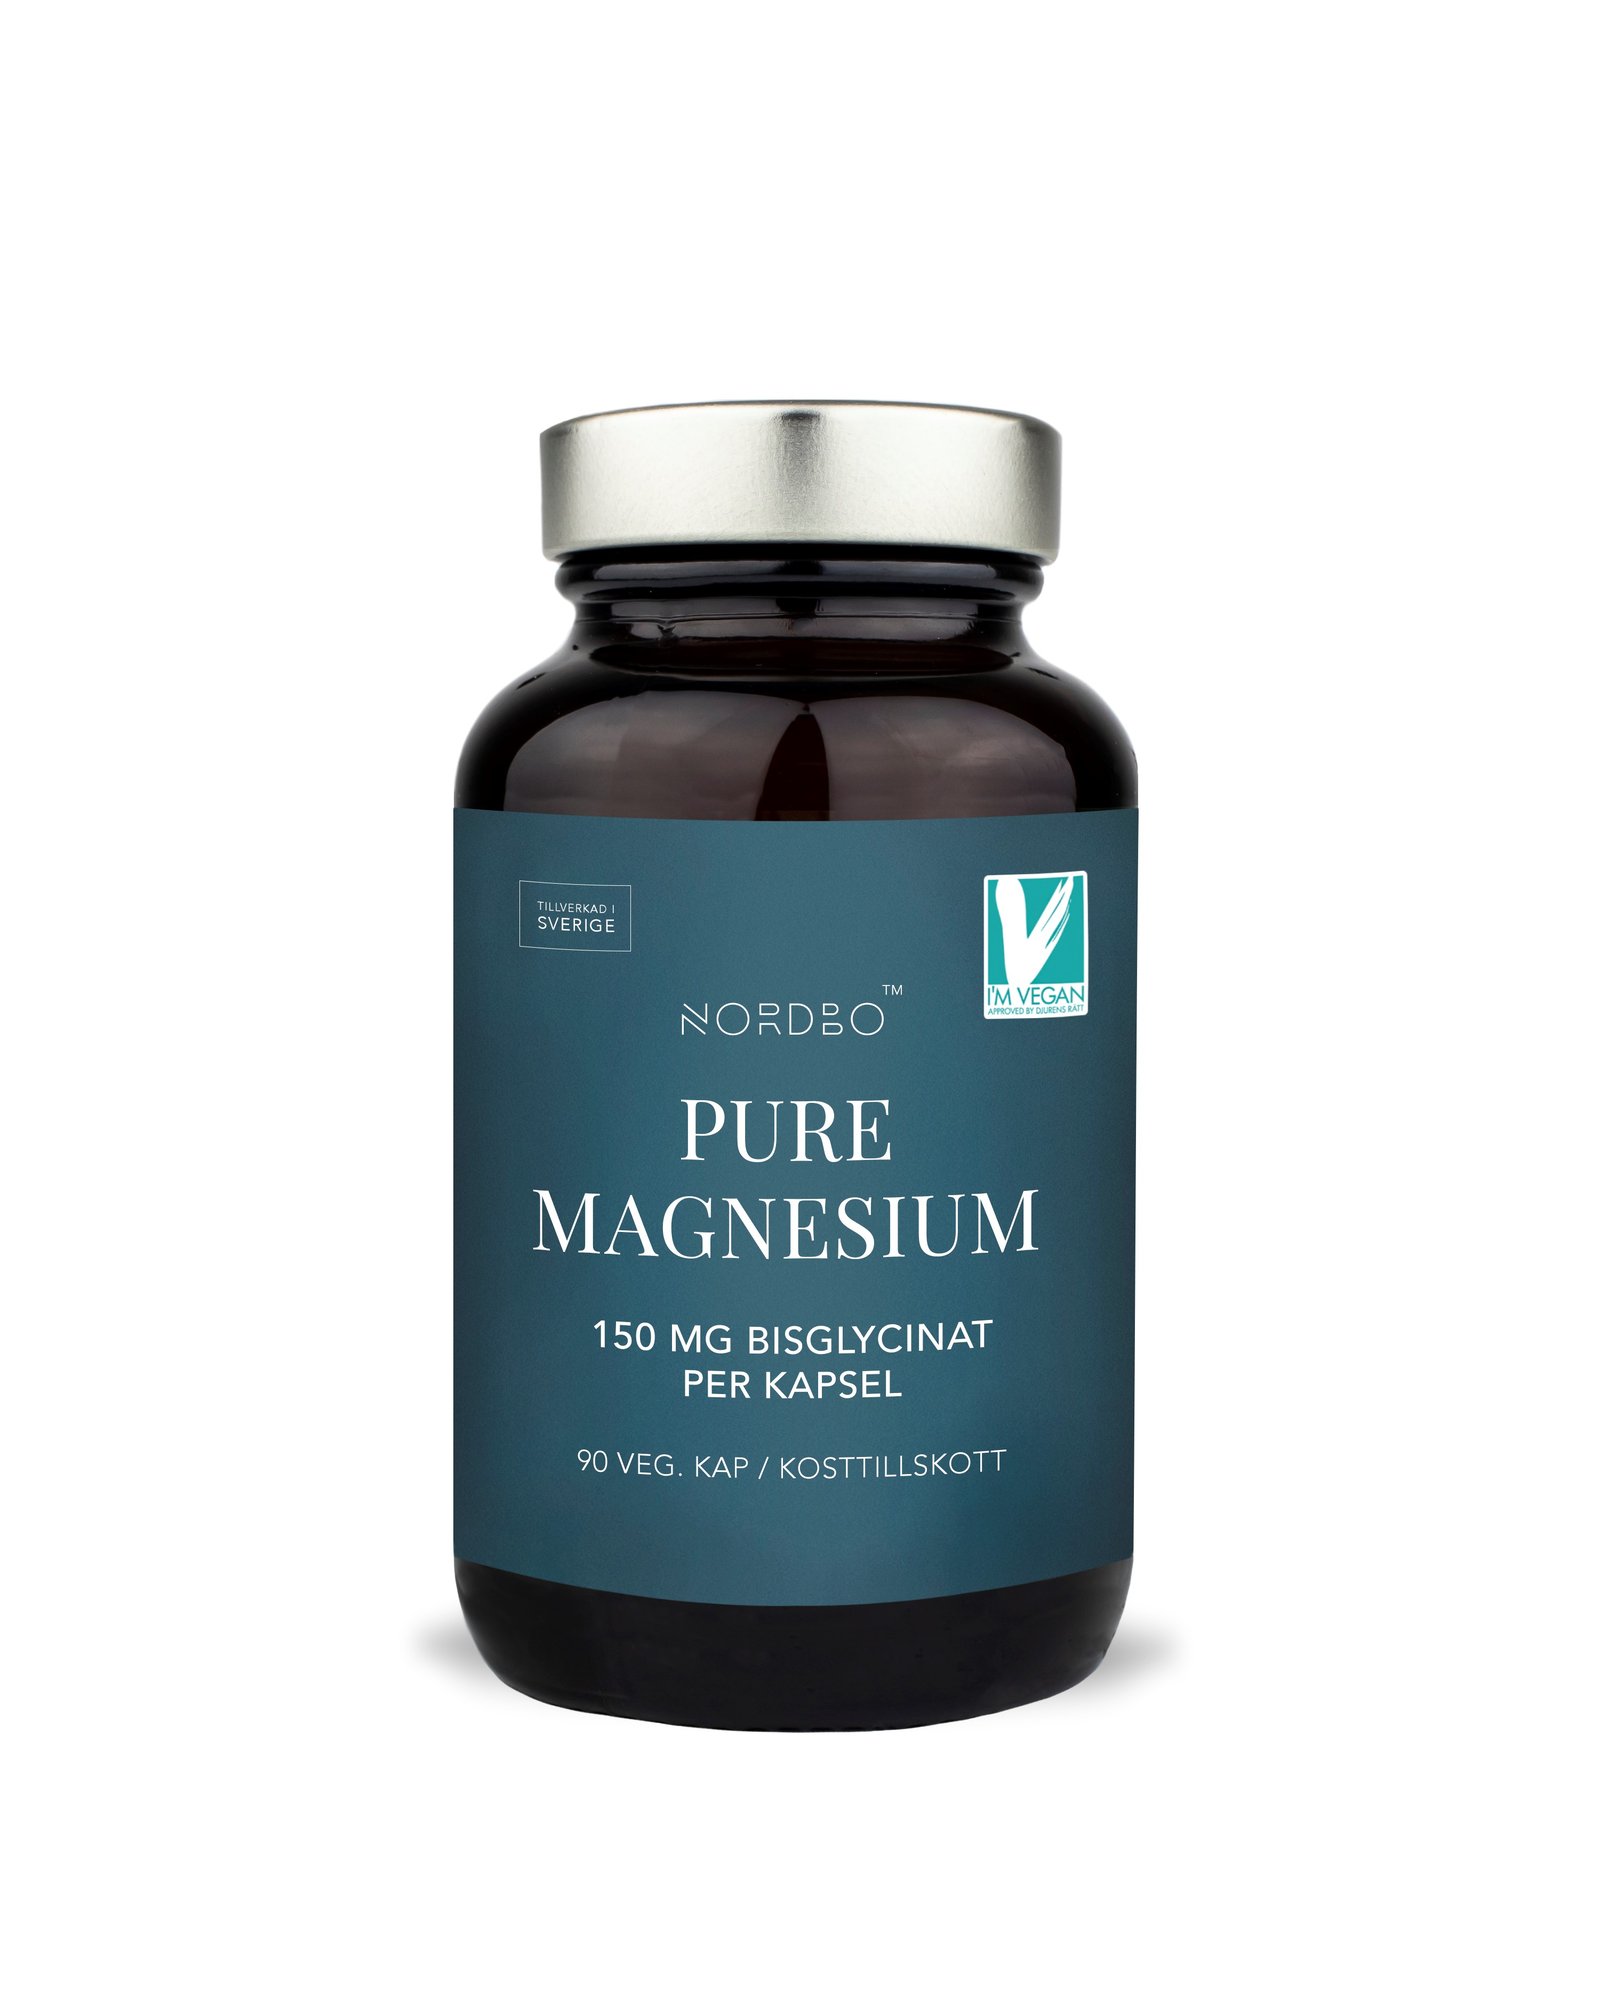 Nordbo Pure Magnesium 100 % Bisglycinat 90 kapslar